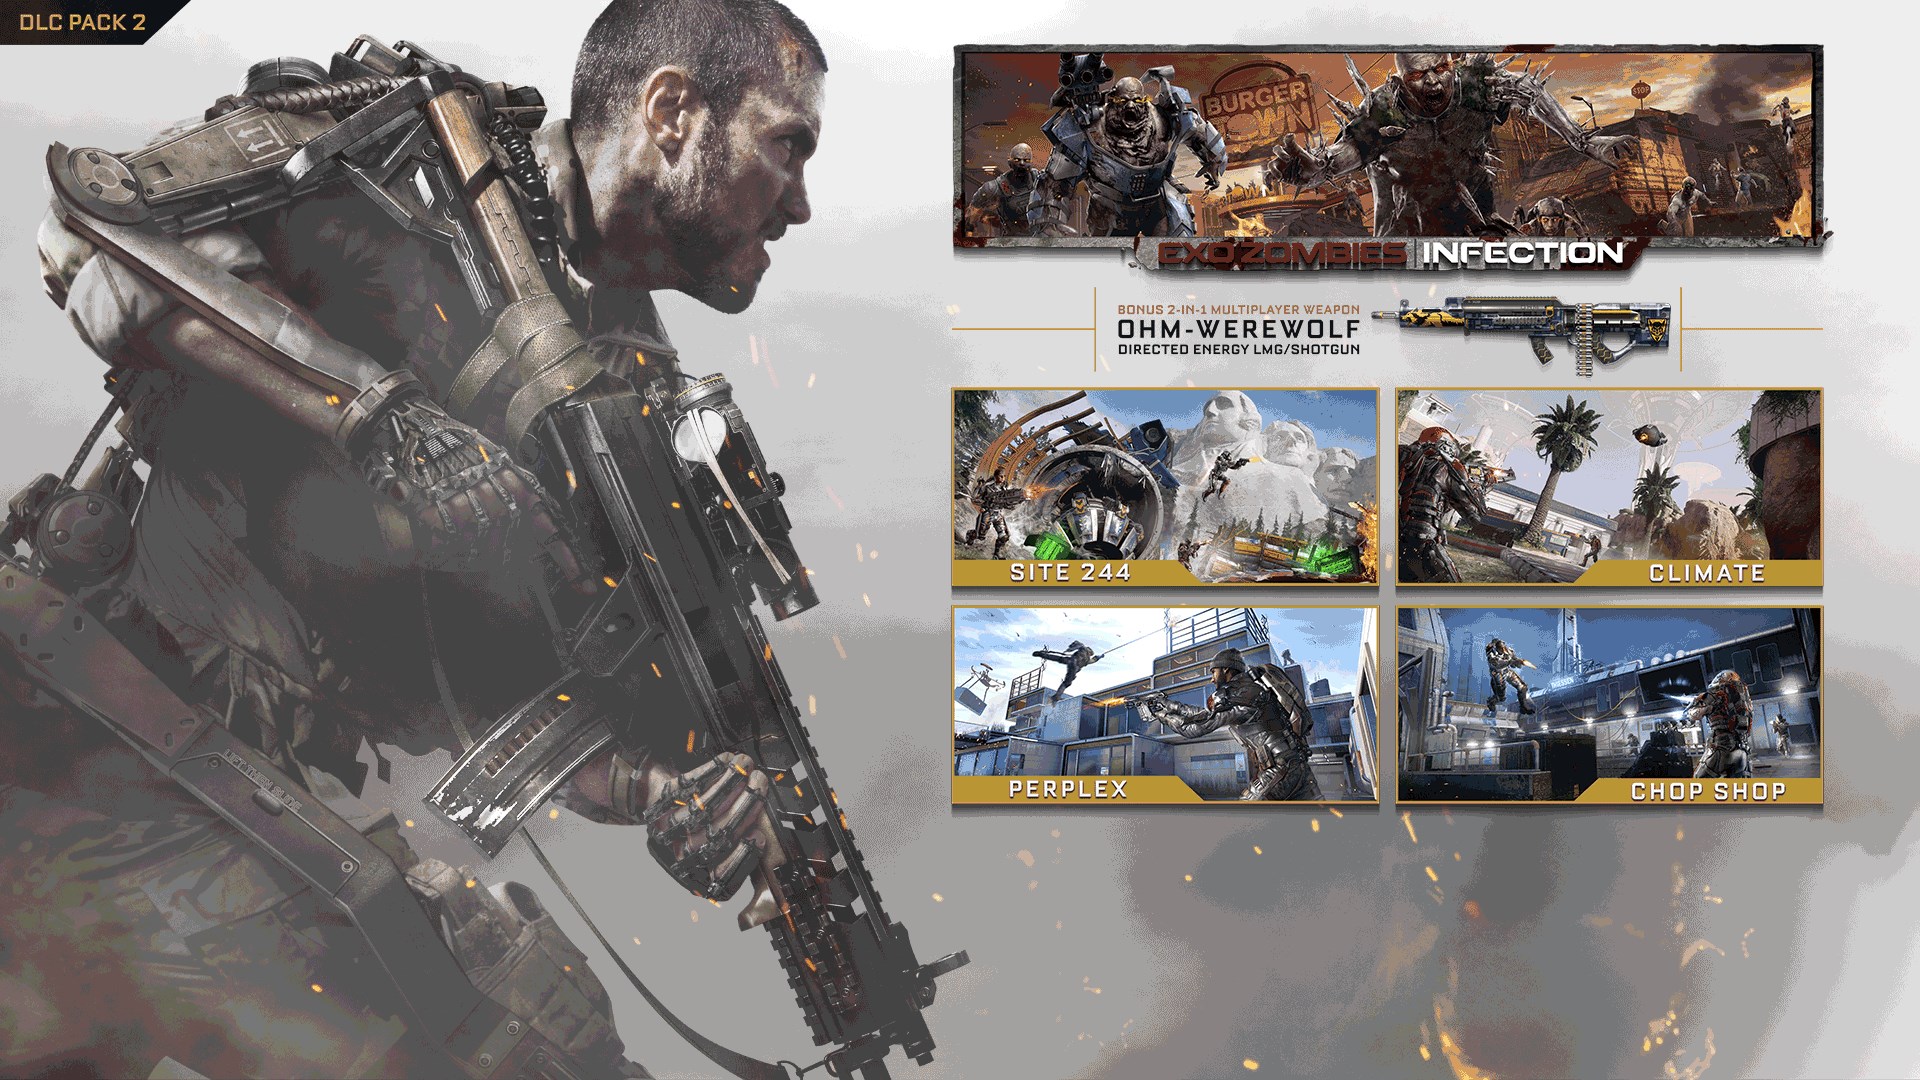 Call of Duty®: Advanced Warfare - Ascendance (EU English Ver.)